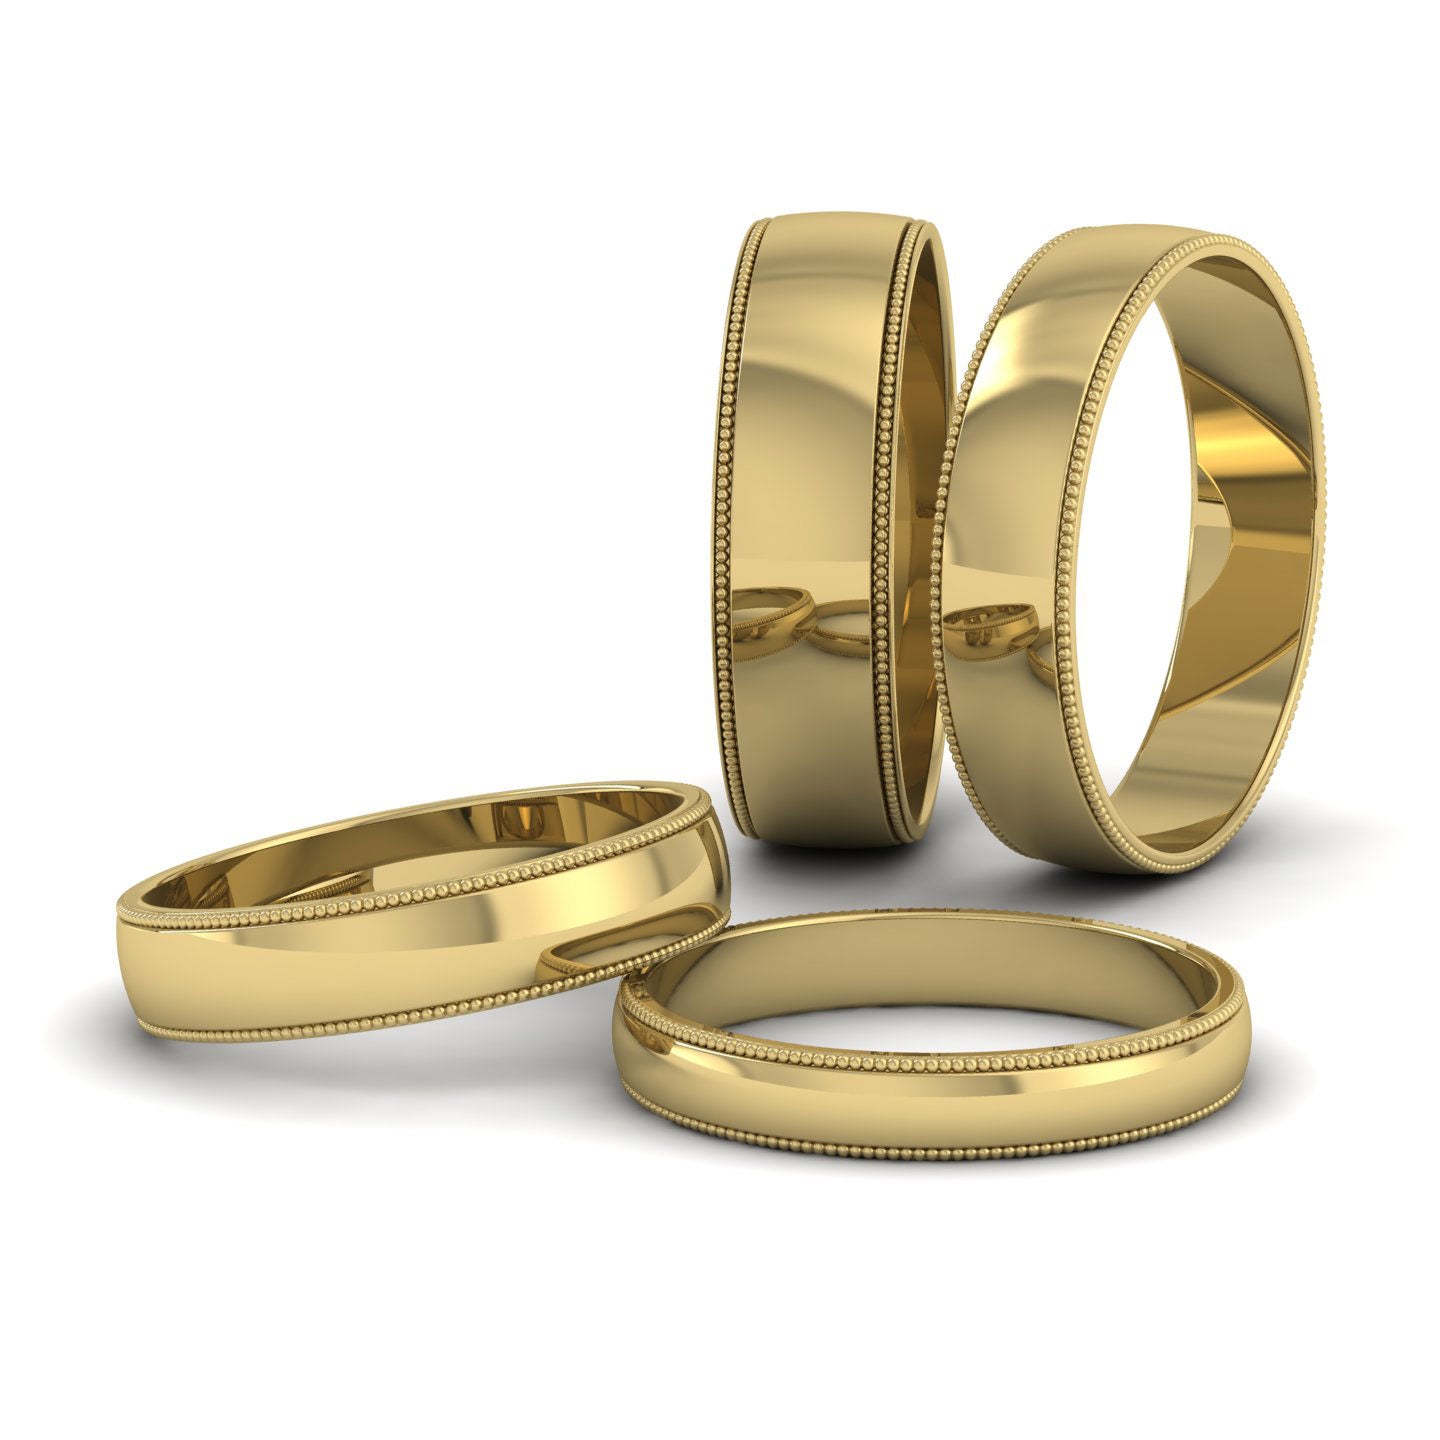 Millgrained Edge 22ct Yellow Gold 4mm Wedding Ring G